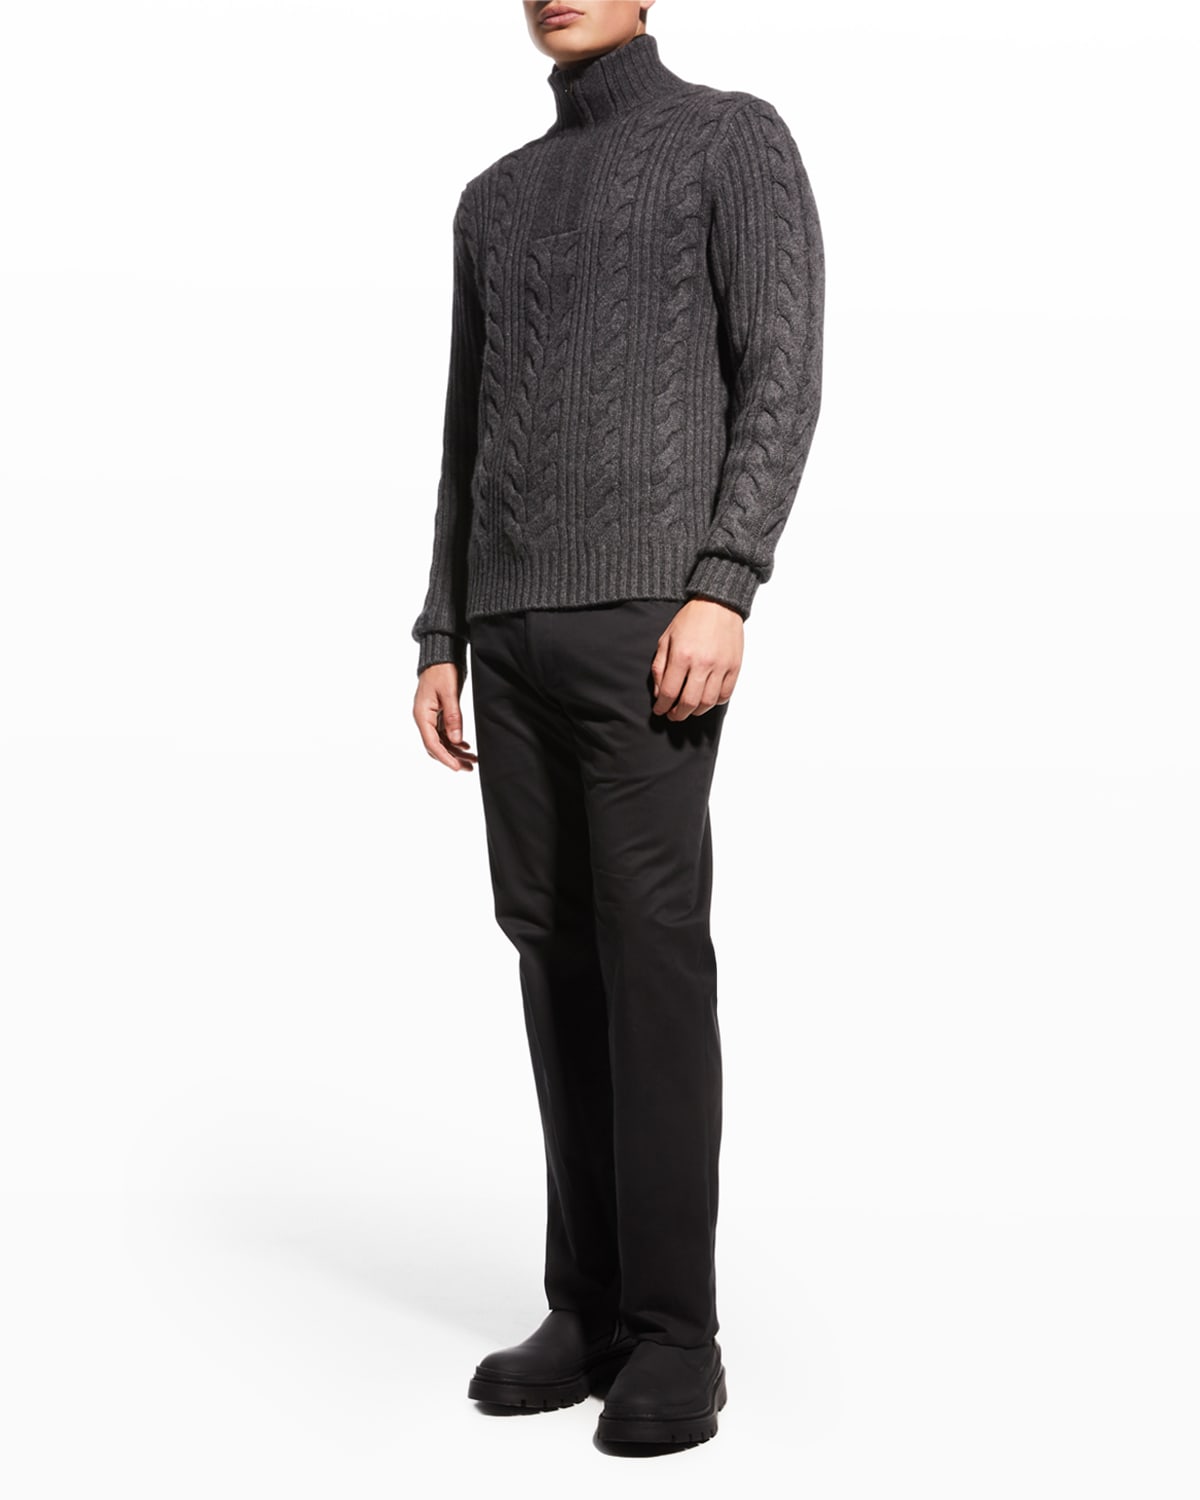 Vince Men's Cable 1/4-Zip Sweater